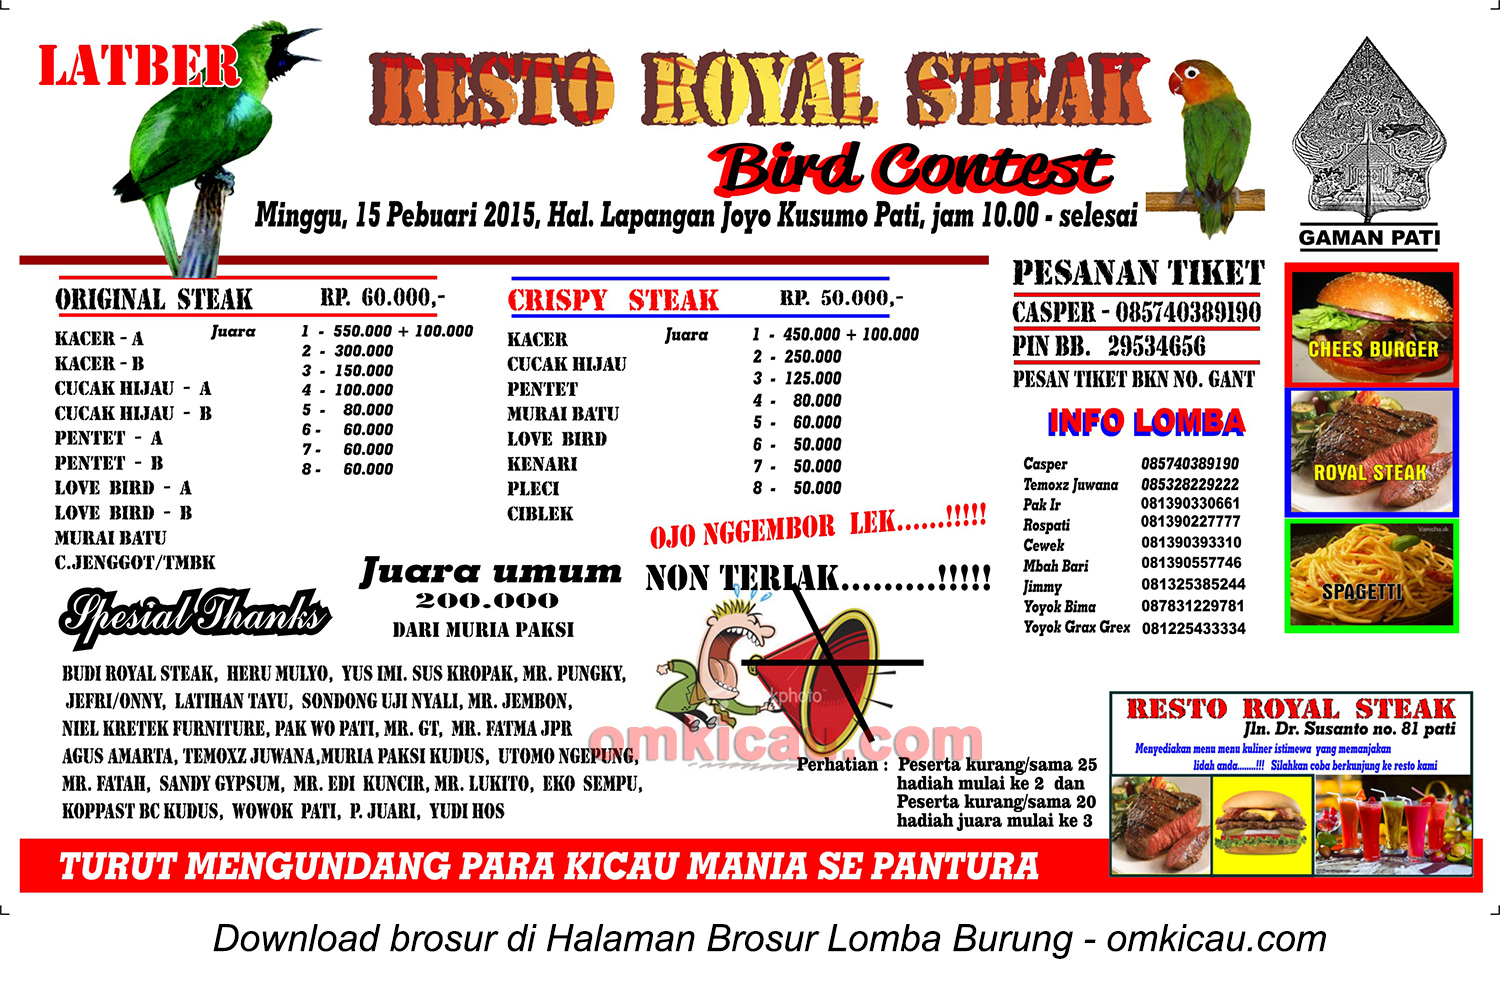 Brosur Lomba Resto Royal Steak Bird Contest, Pati, 15 Februari 2015